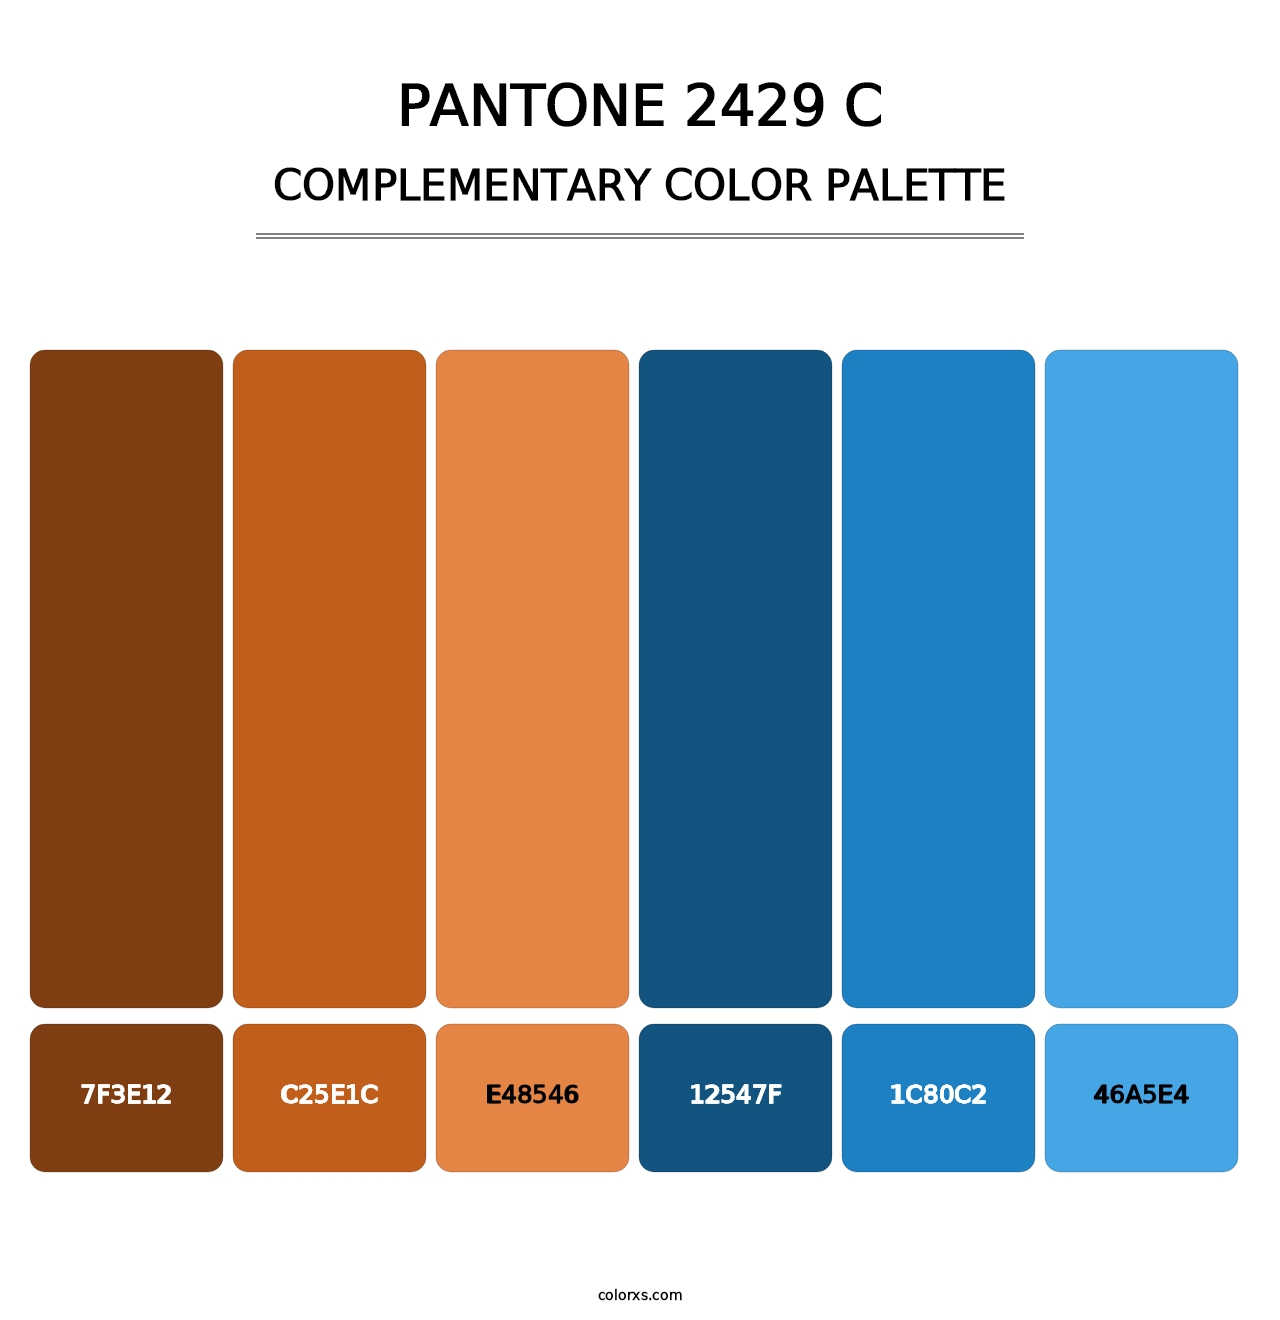 PANTONE 2429 C - Complementary Color Palette